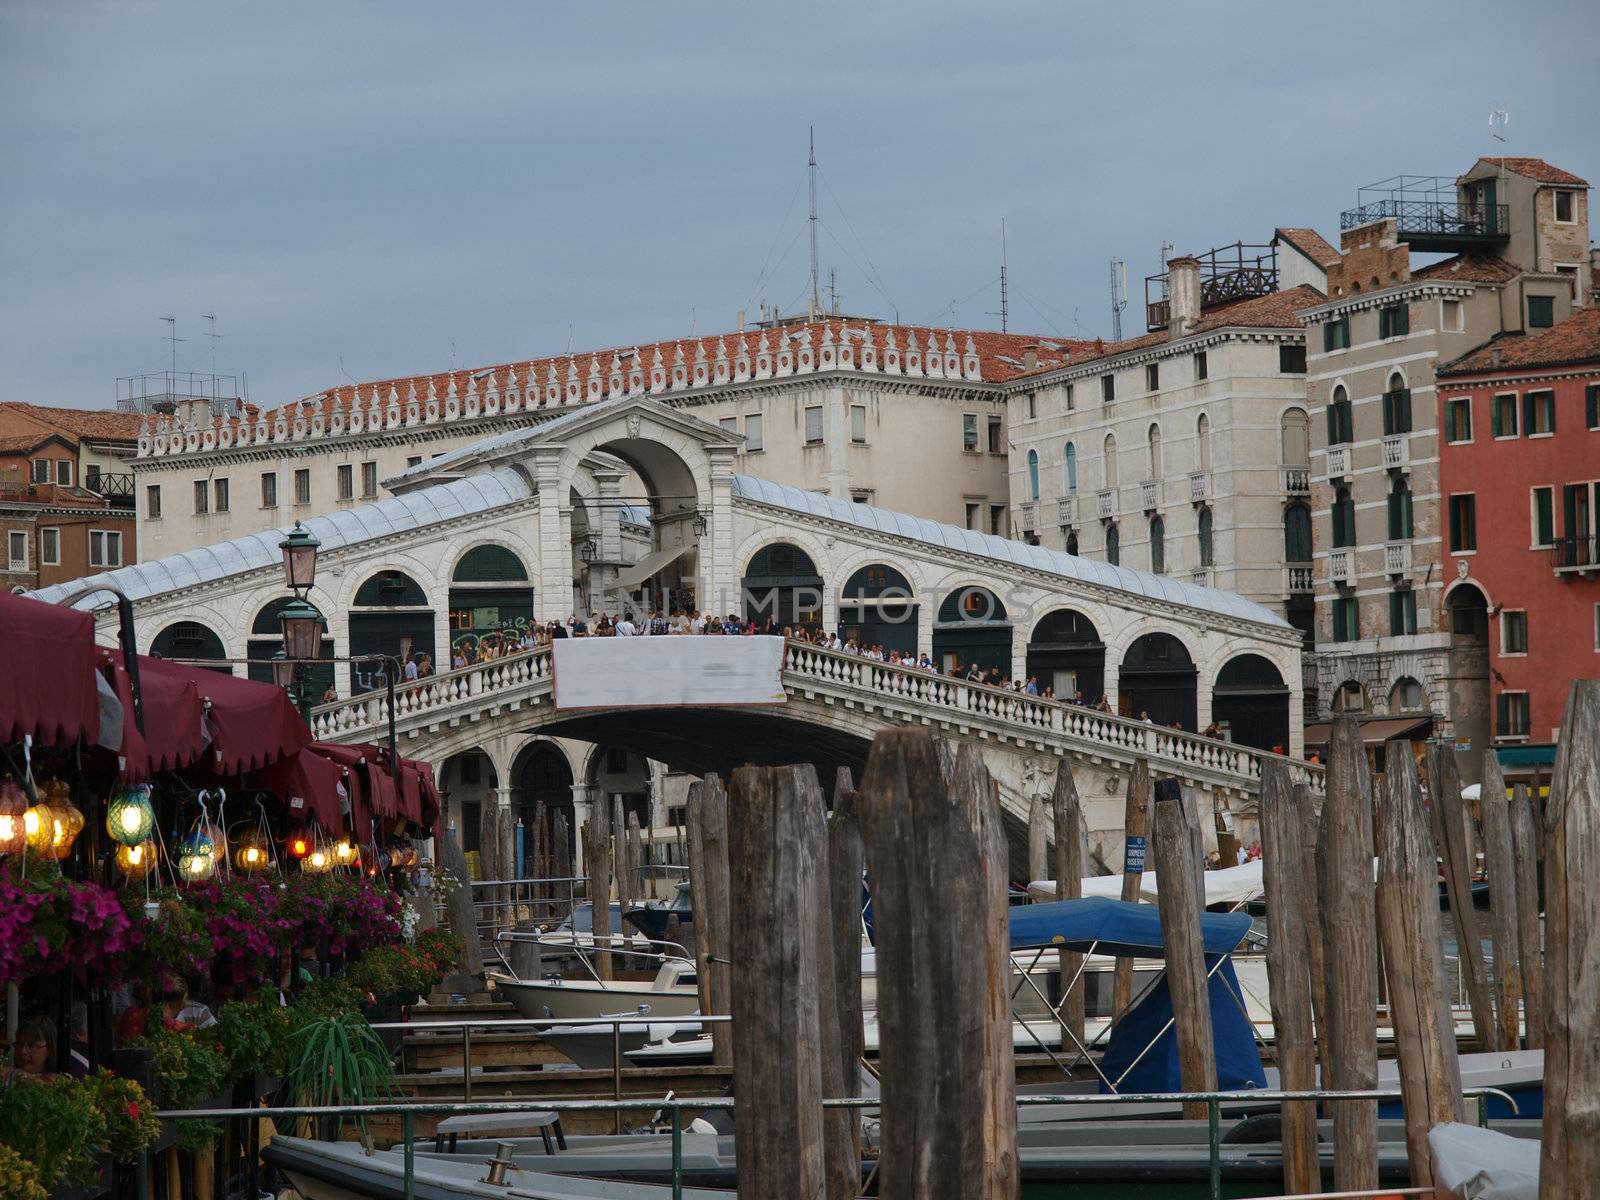 Venice - Parking gondolas nearby Rialto Bridge